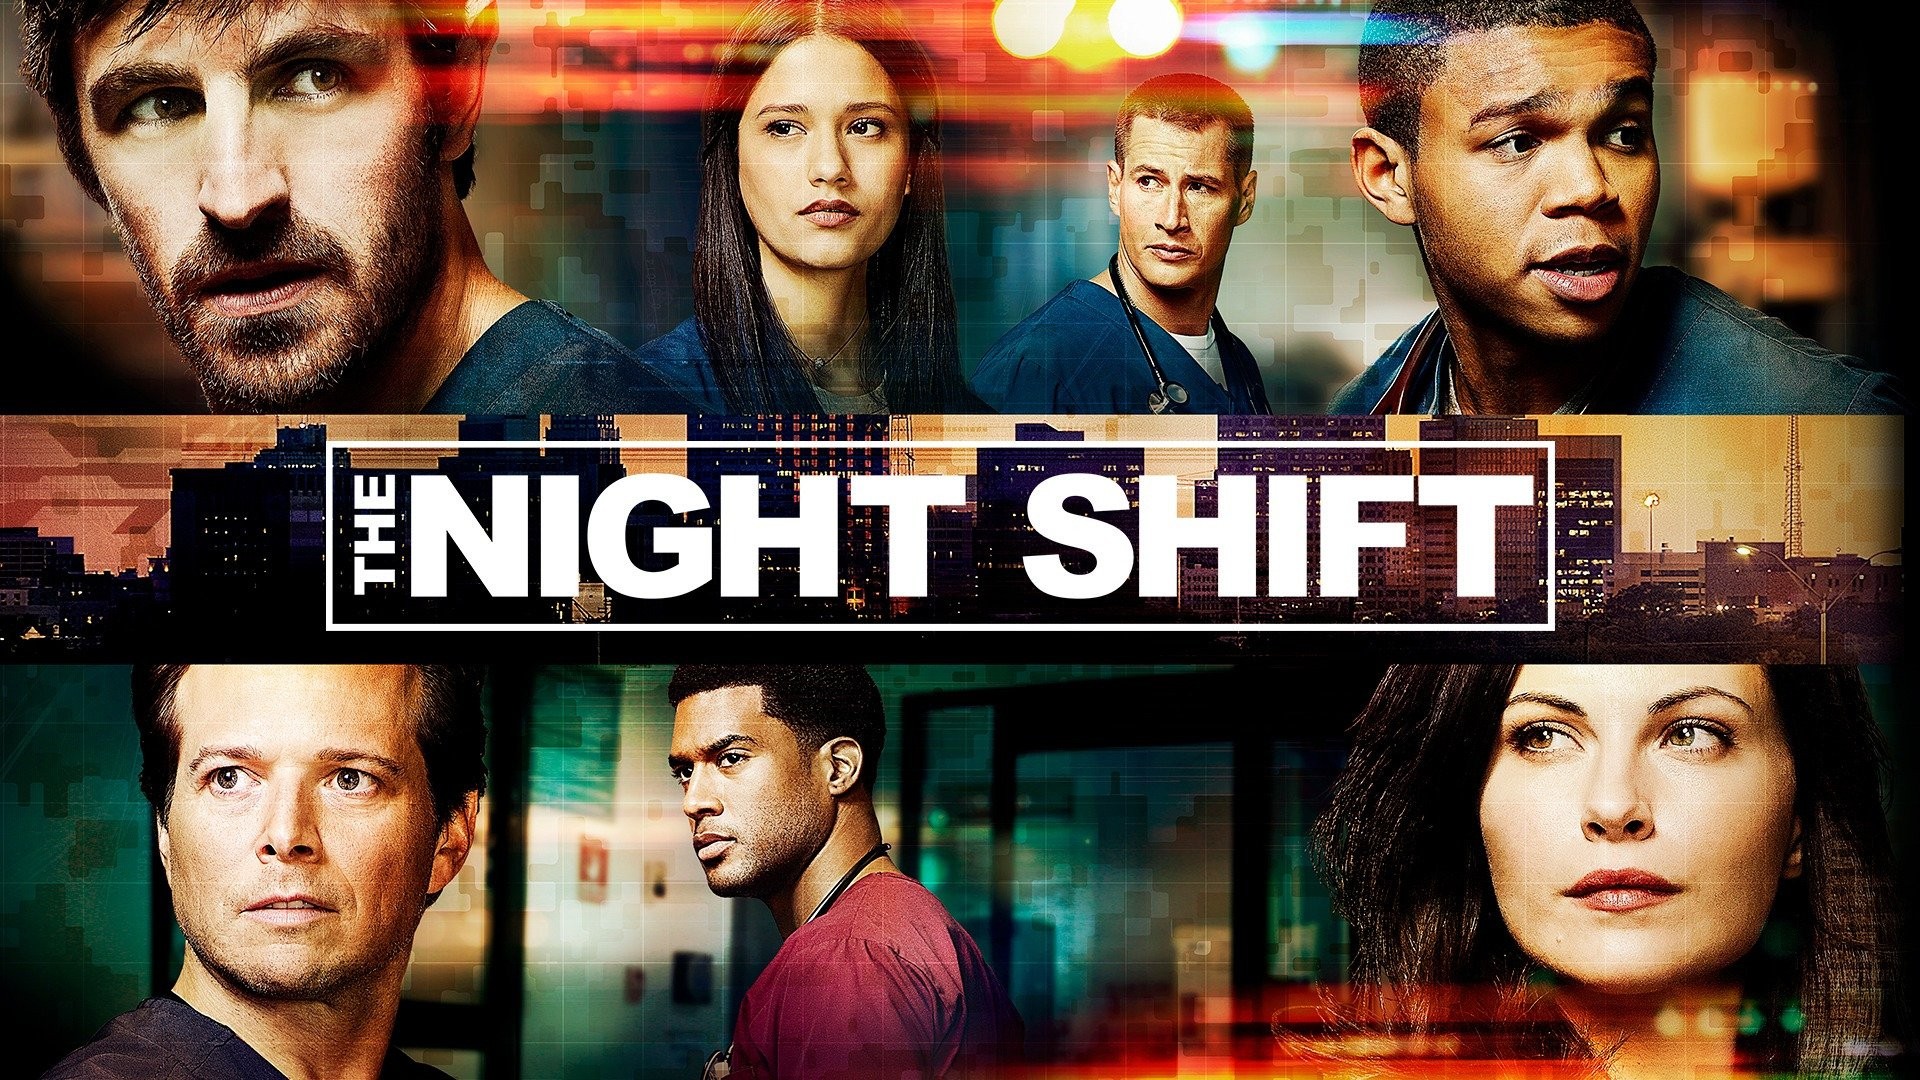 The Night Shift TV show on NBC